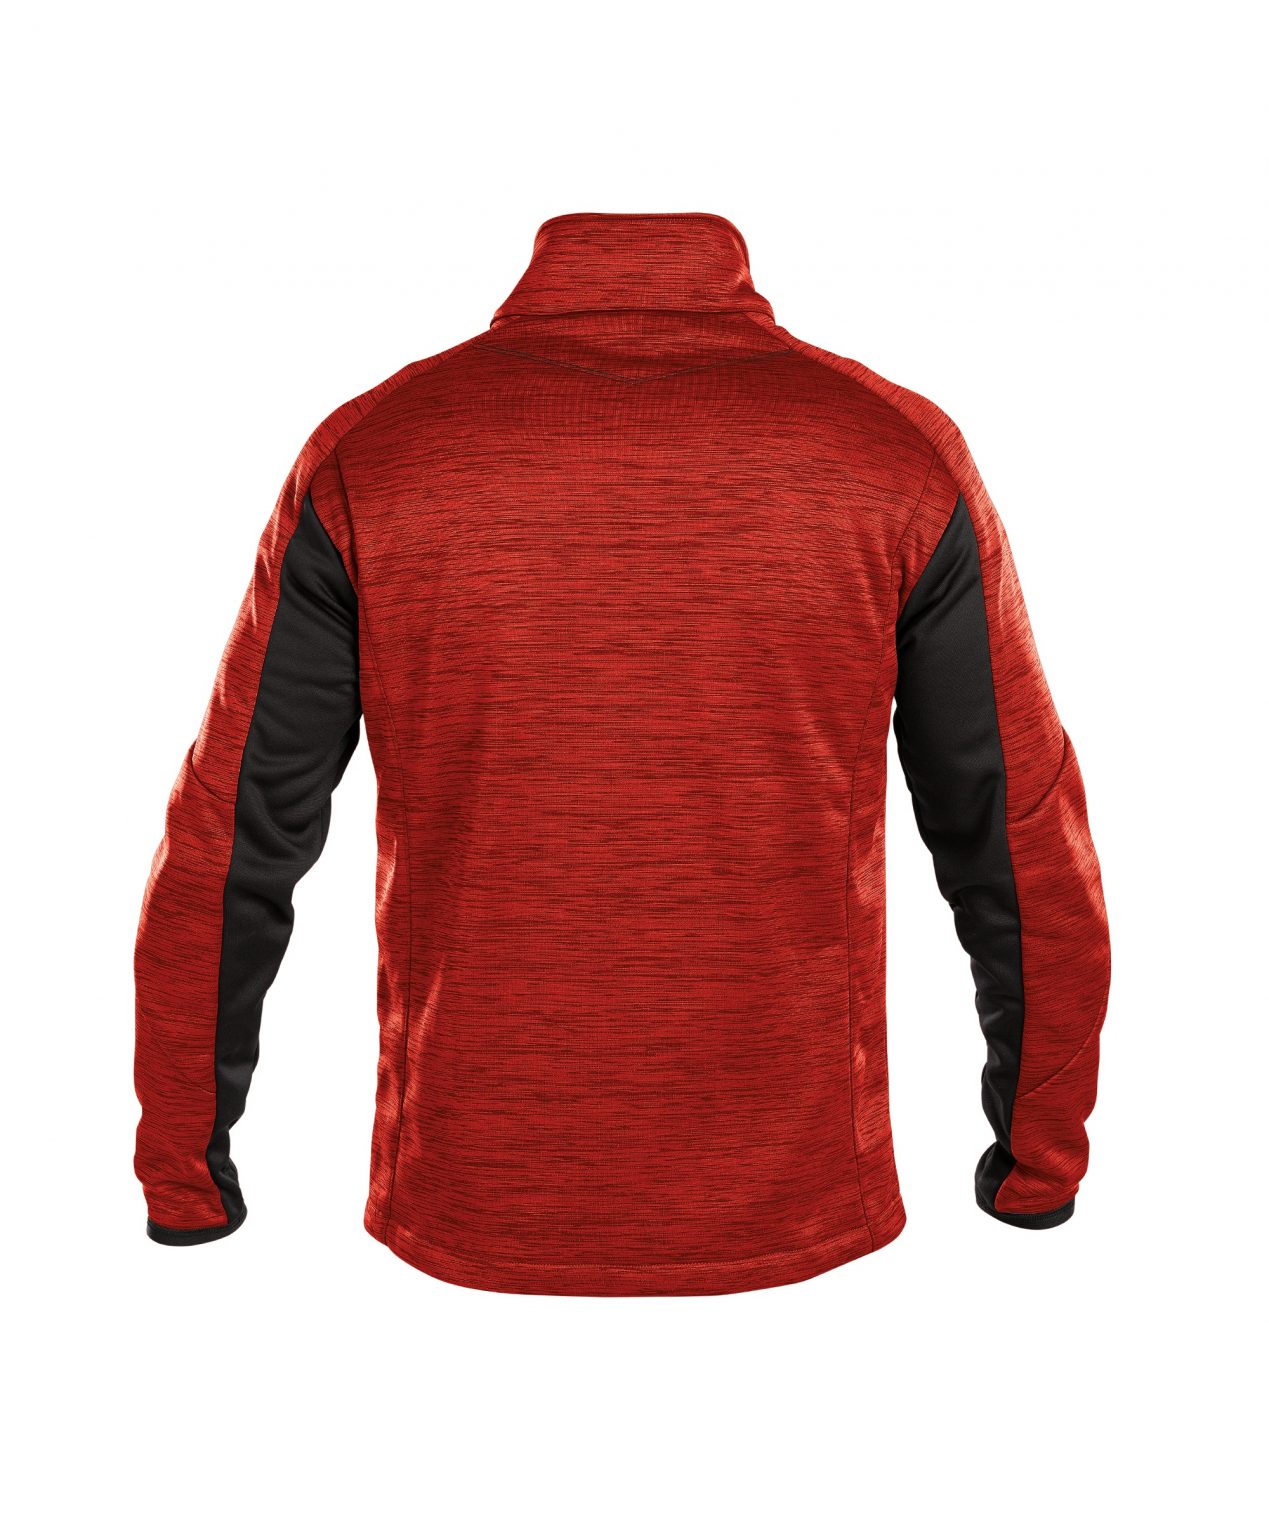 convex midlayer jacket red black back